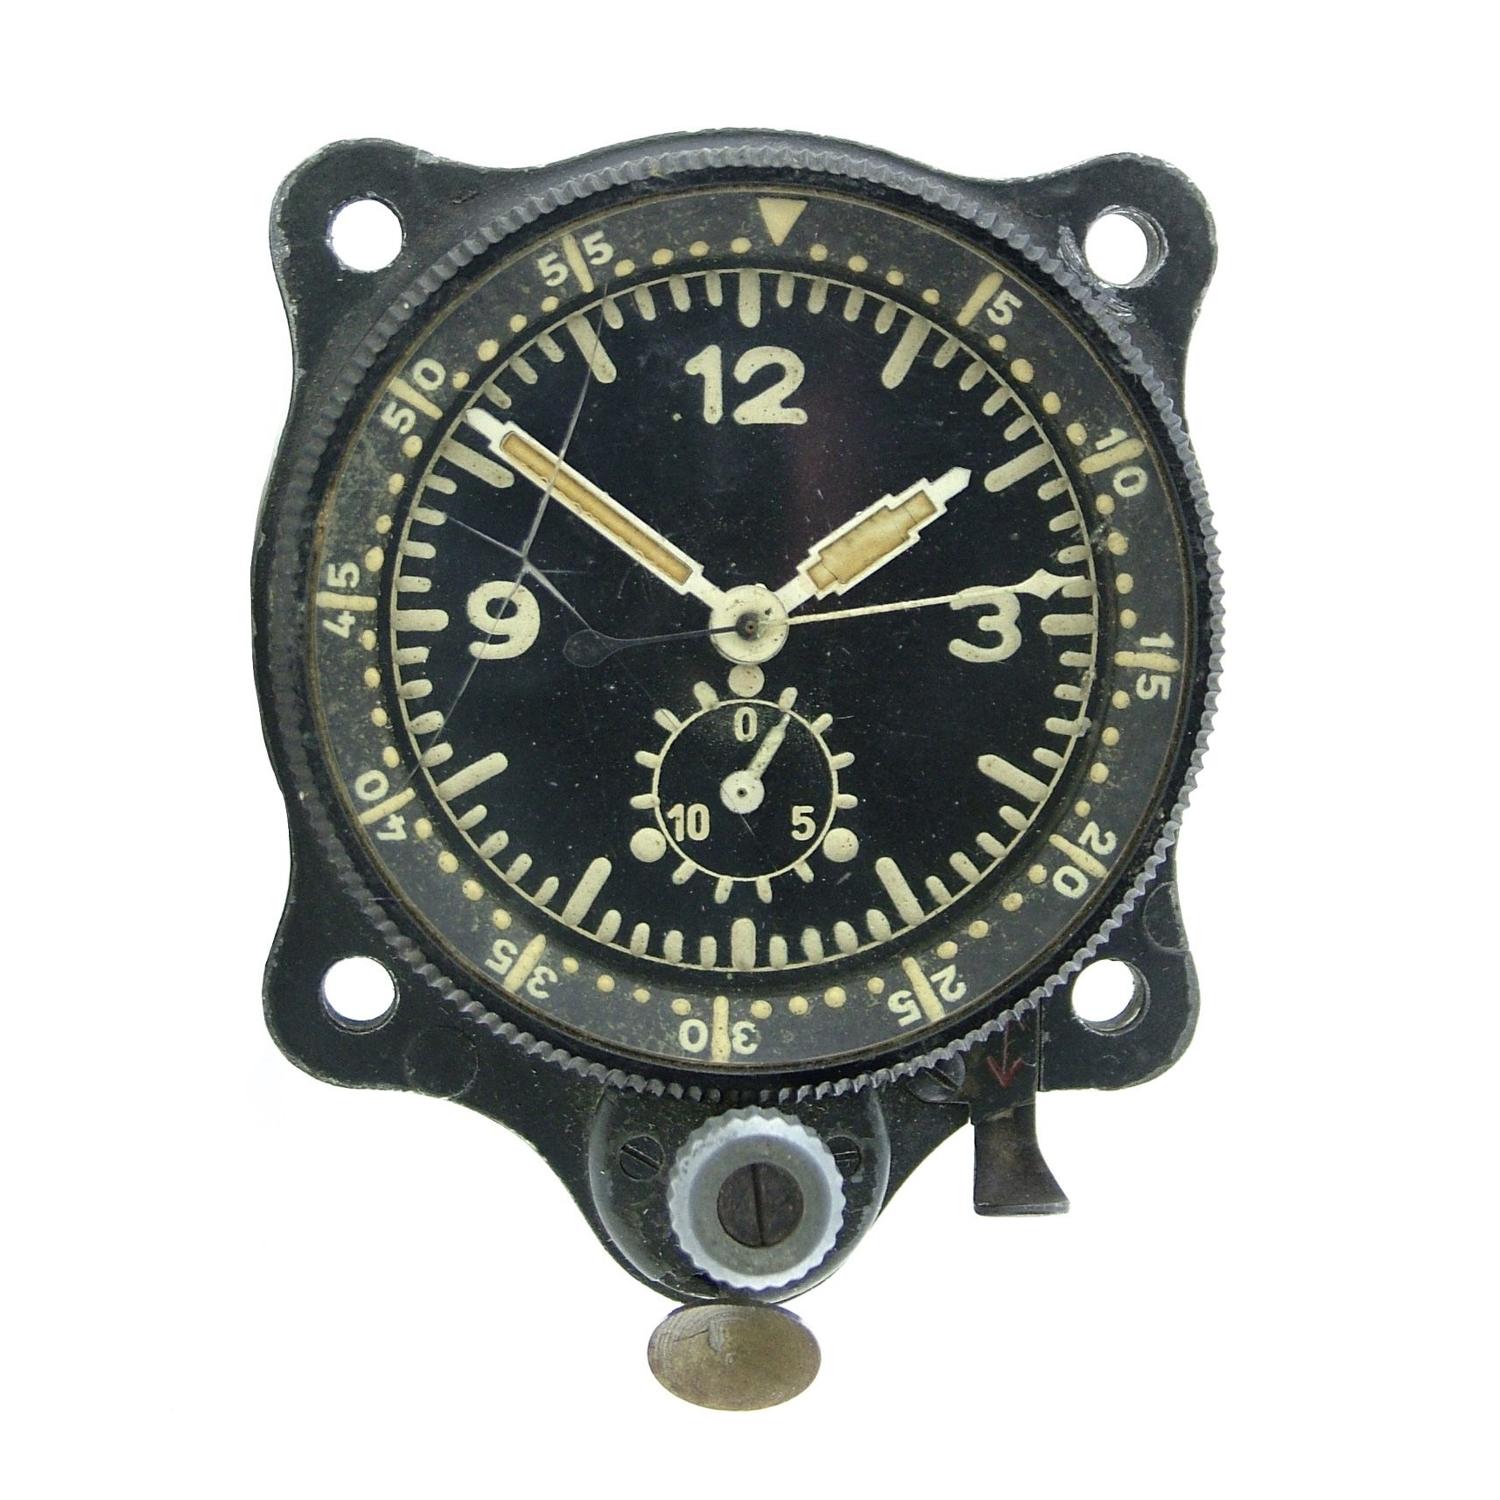 Luftwaffe cockpit clock